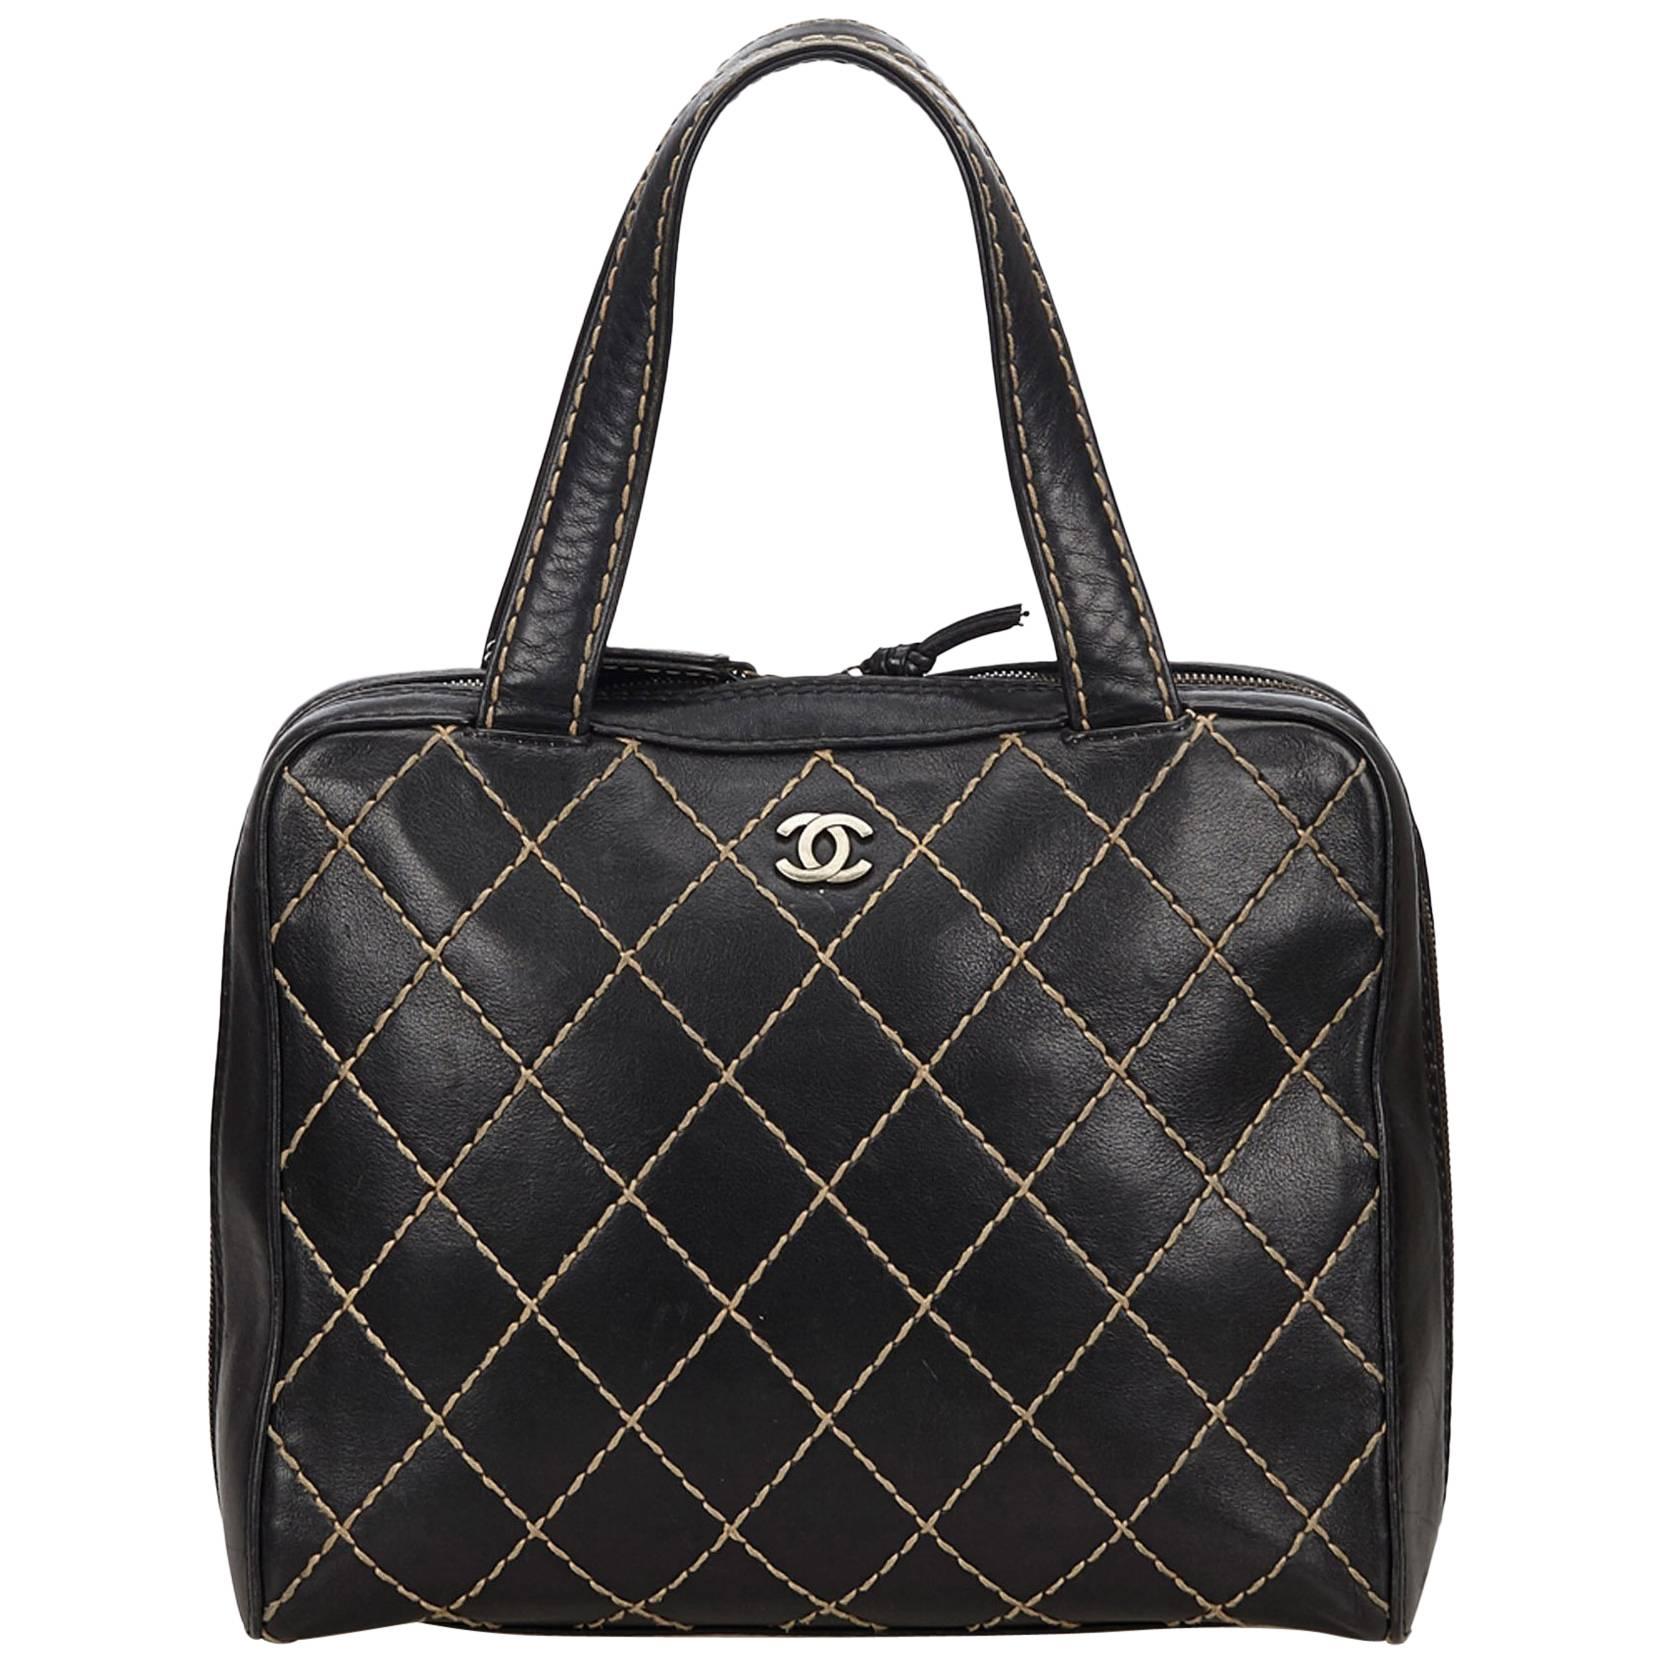 Chanel Black Lambskin Leather Surpique Handbag For Sale